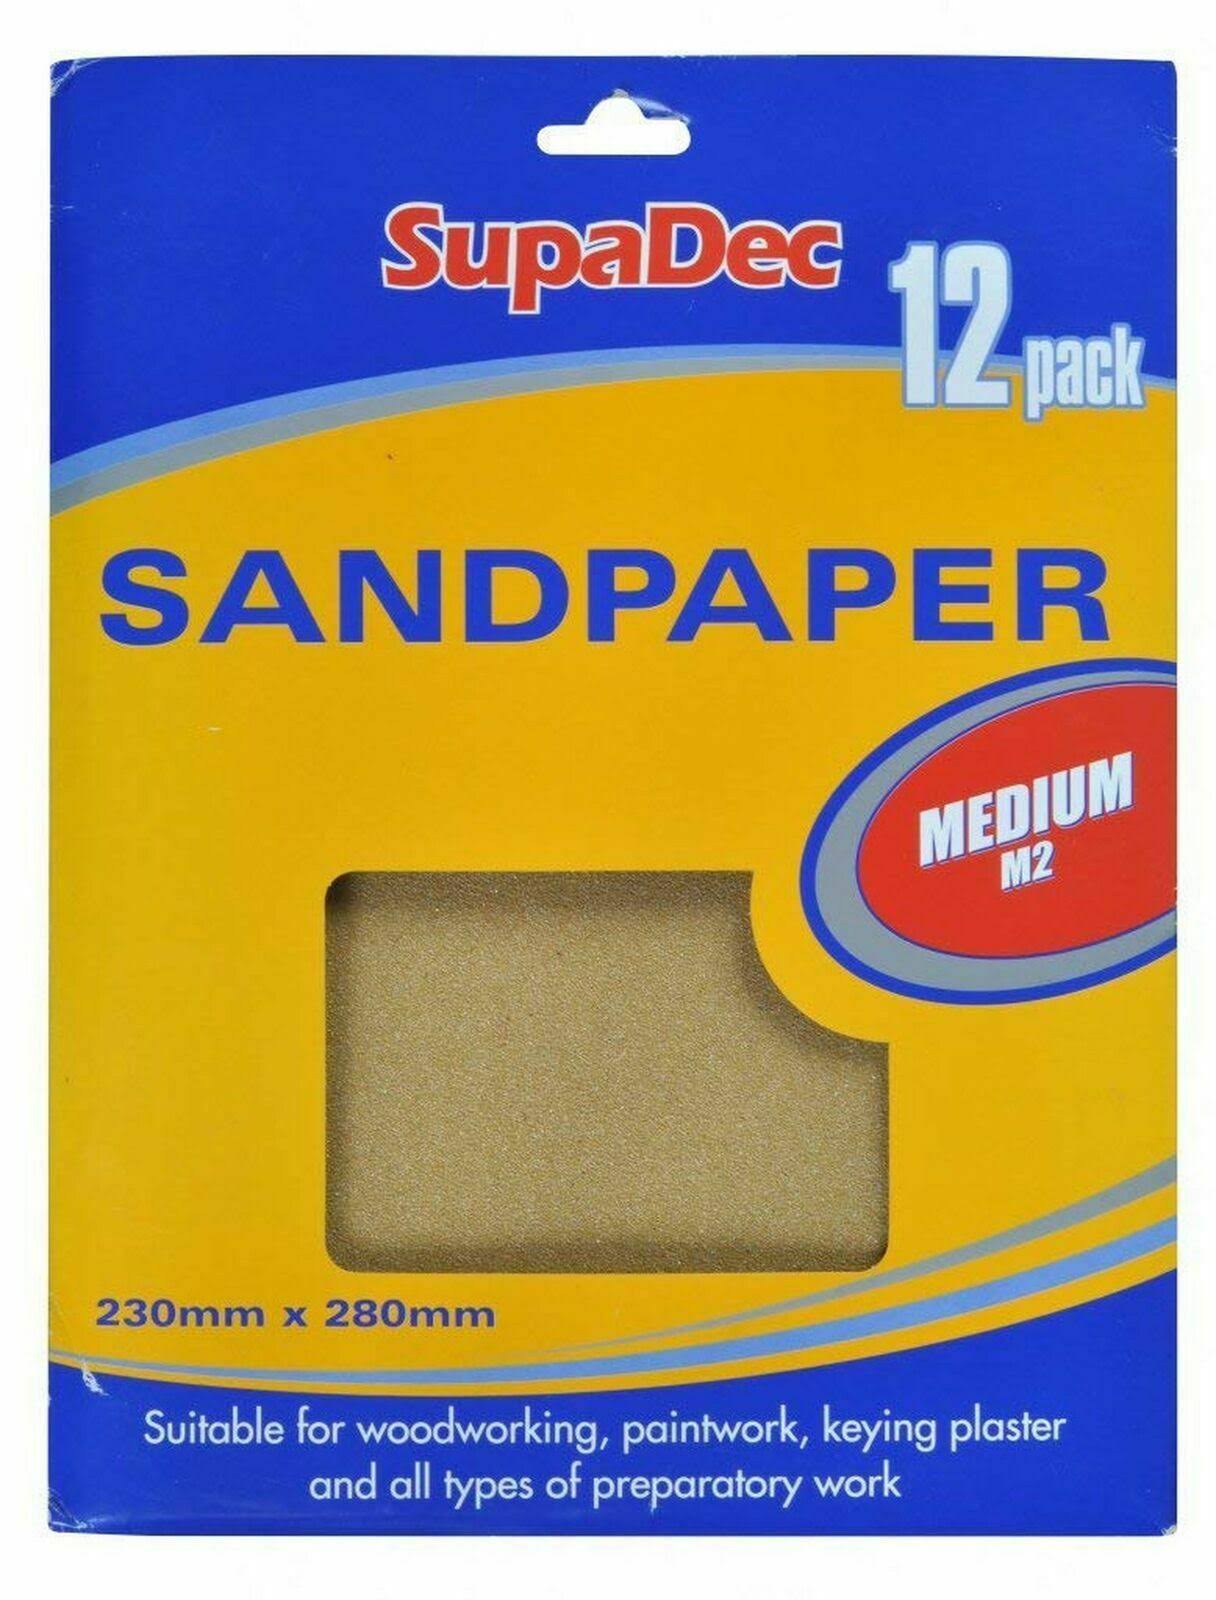 SupaDec - General Purpose Sandpaper Pack 12 Medium M2